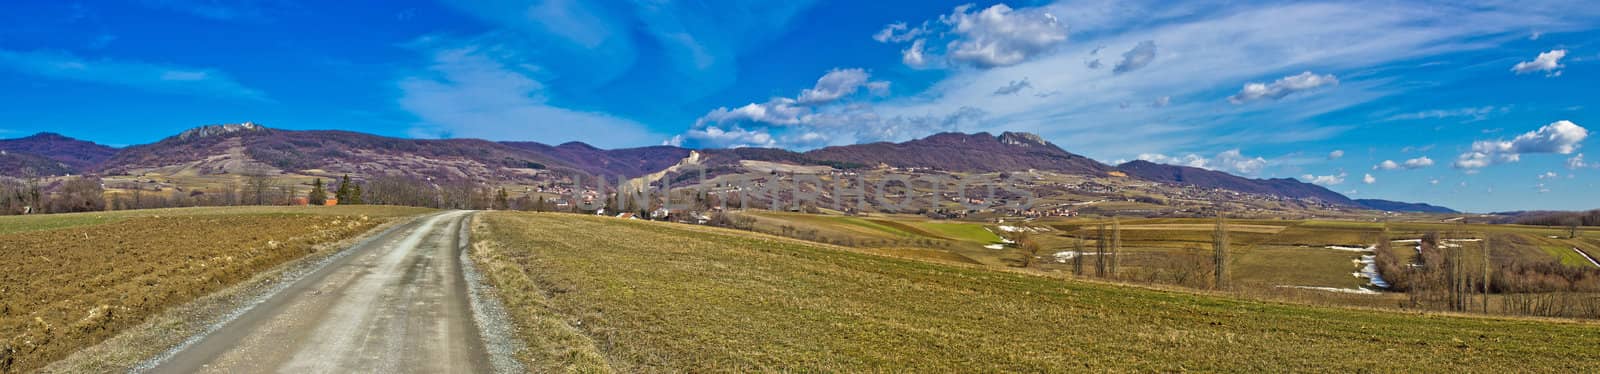 Kalnik mountain natural scenery panorama by xbrchx